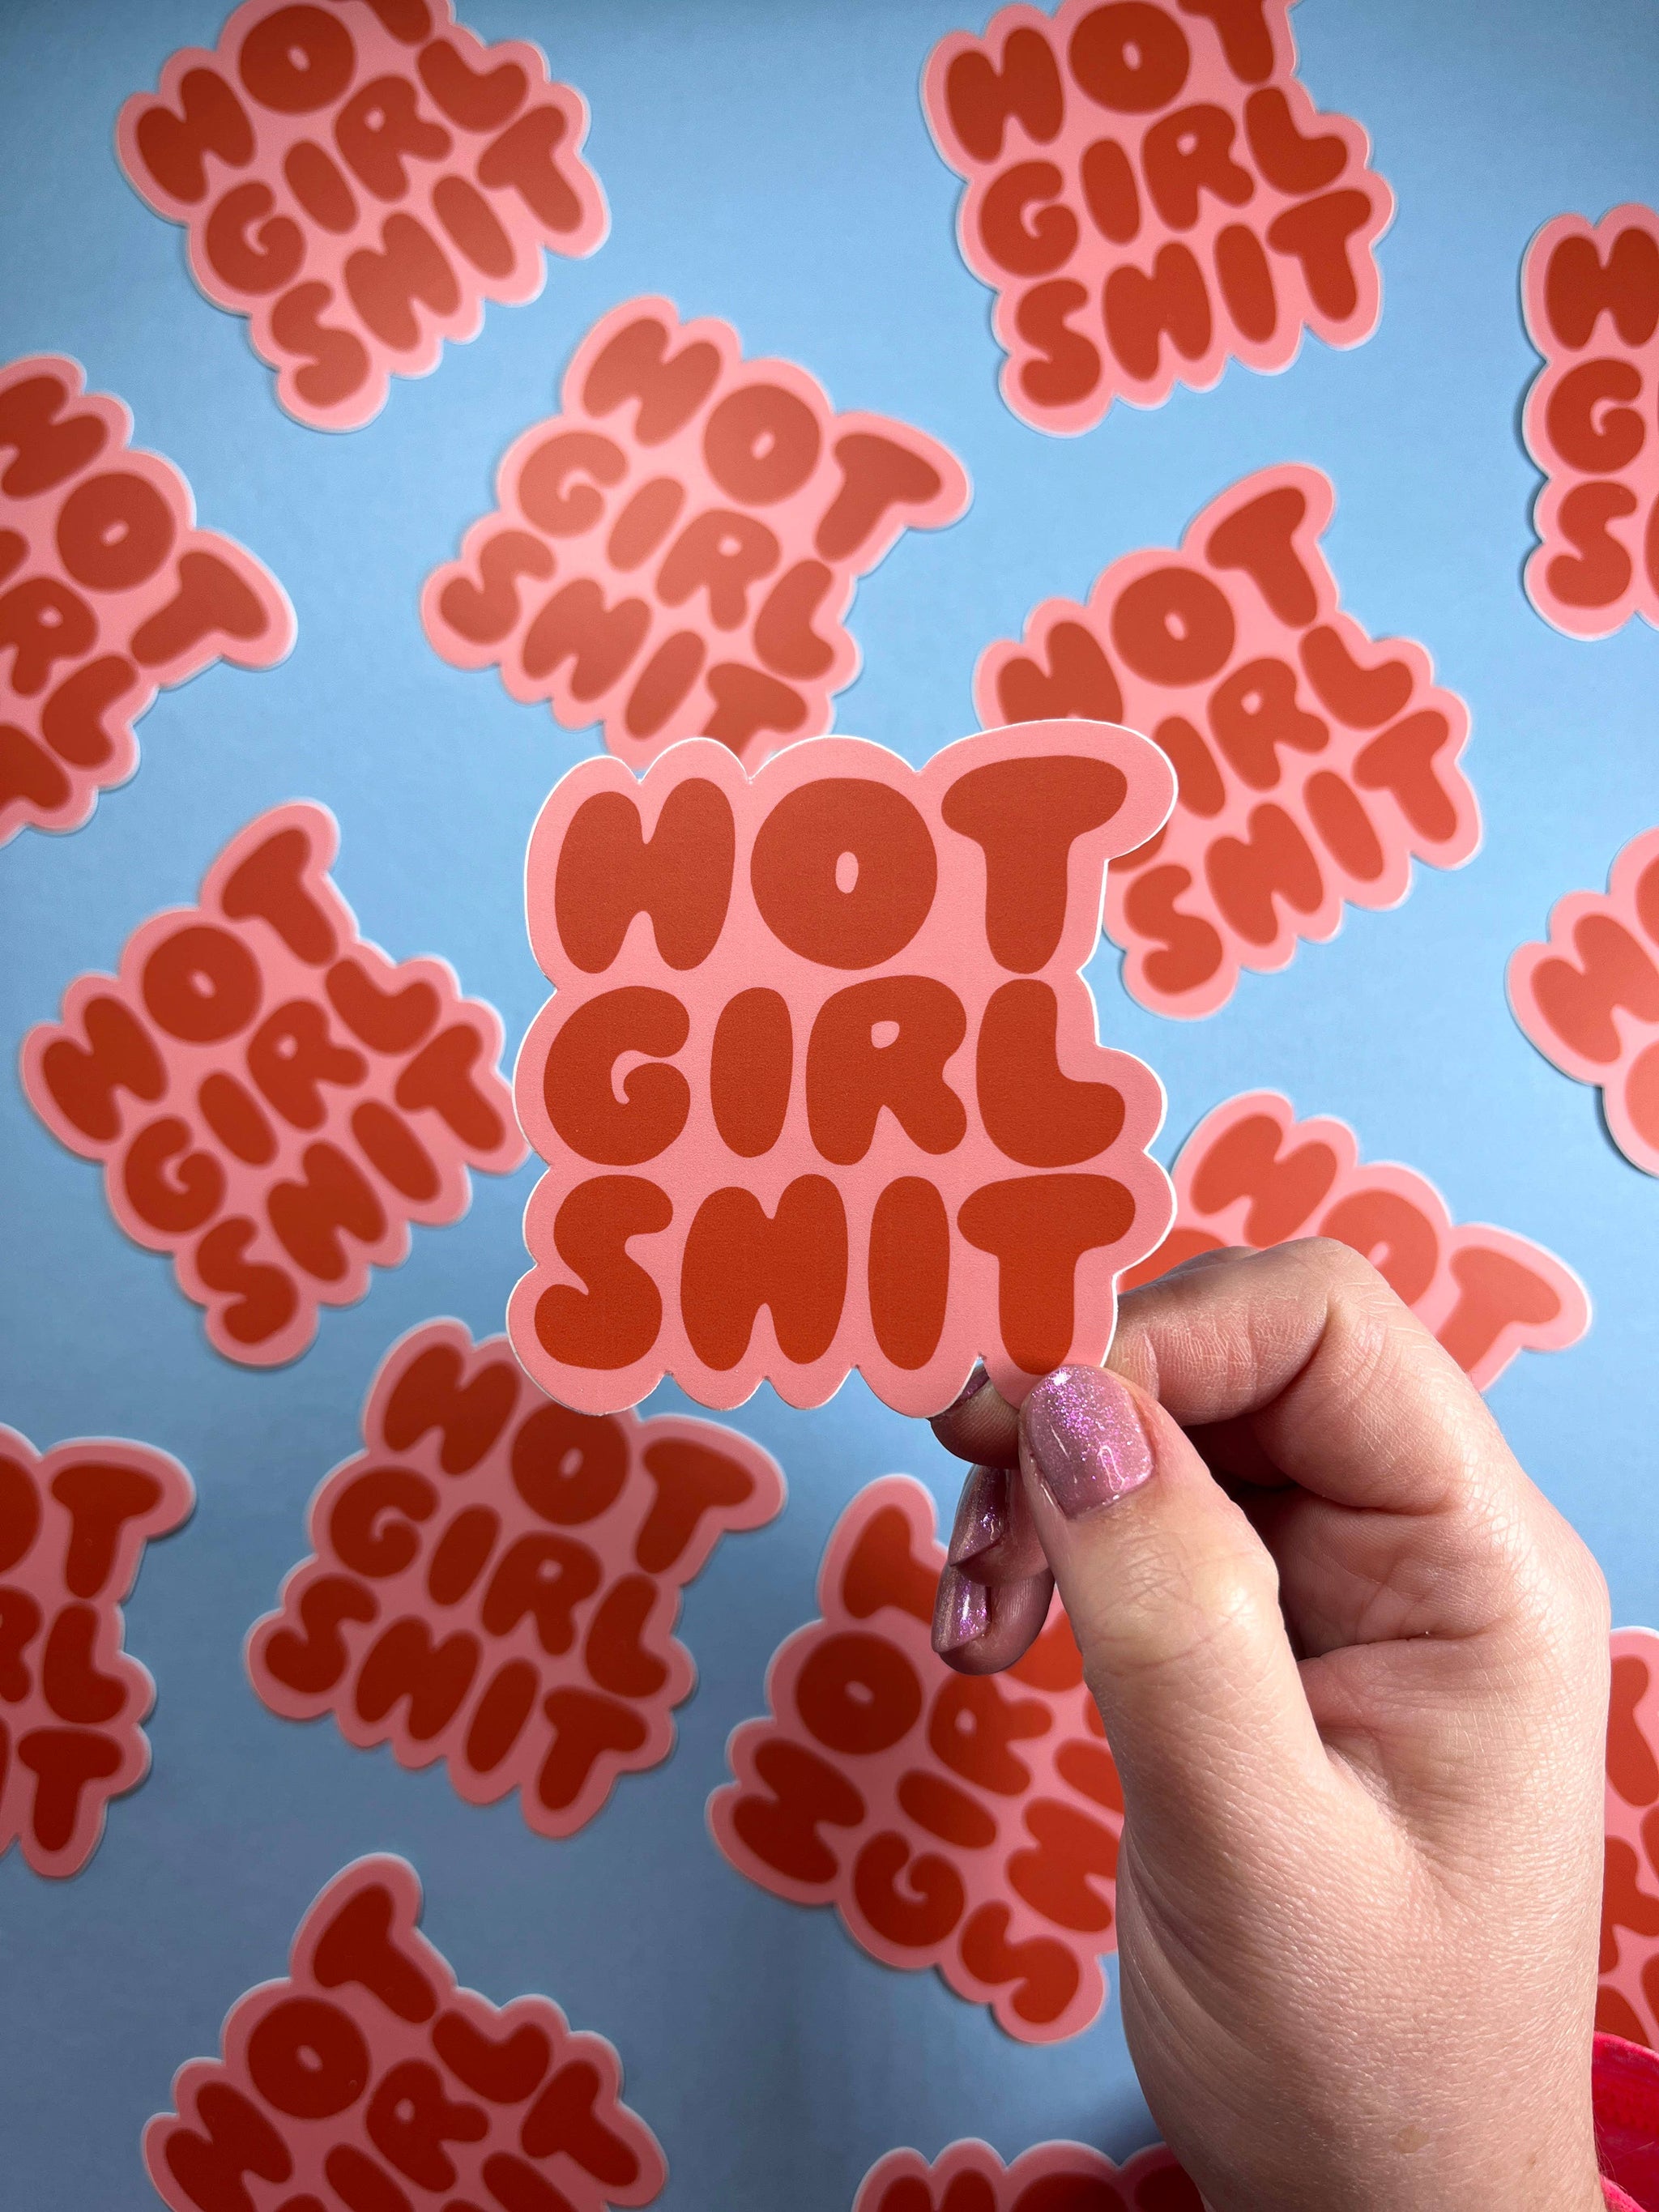 Hot Girl Shit Vinyl Sticker